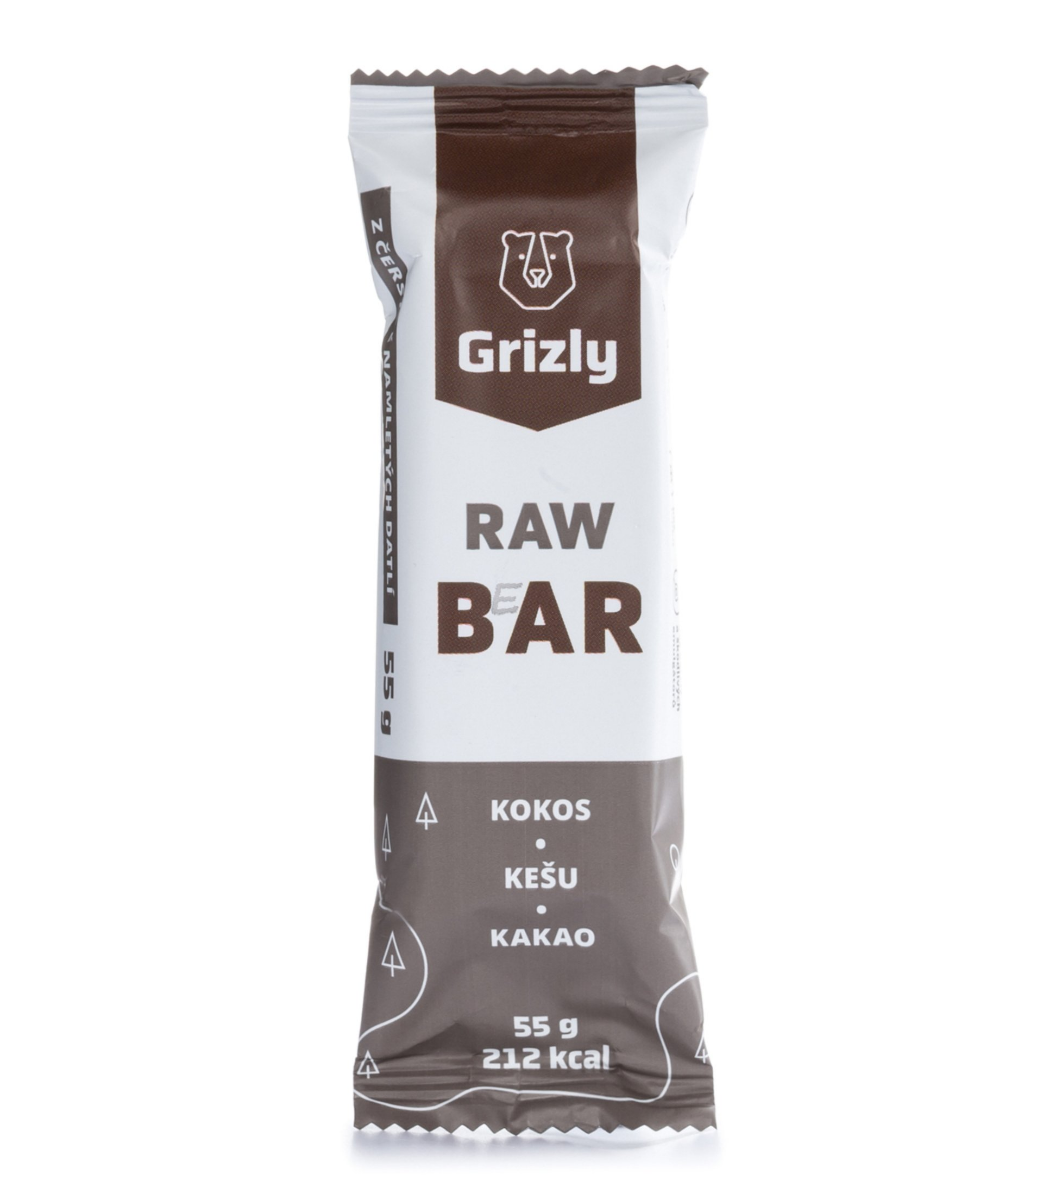 Grizly Raw Bar kokos